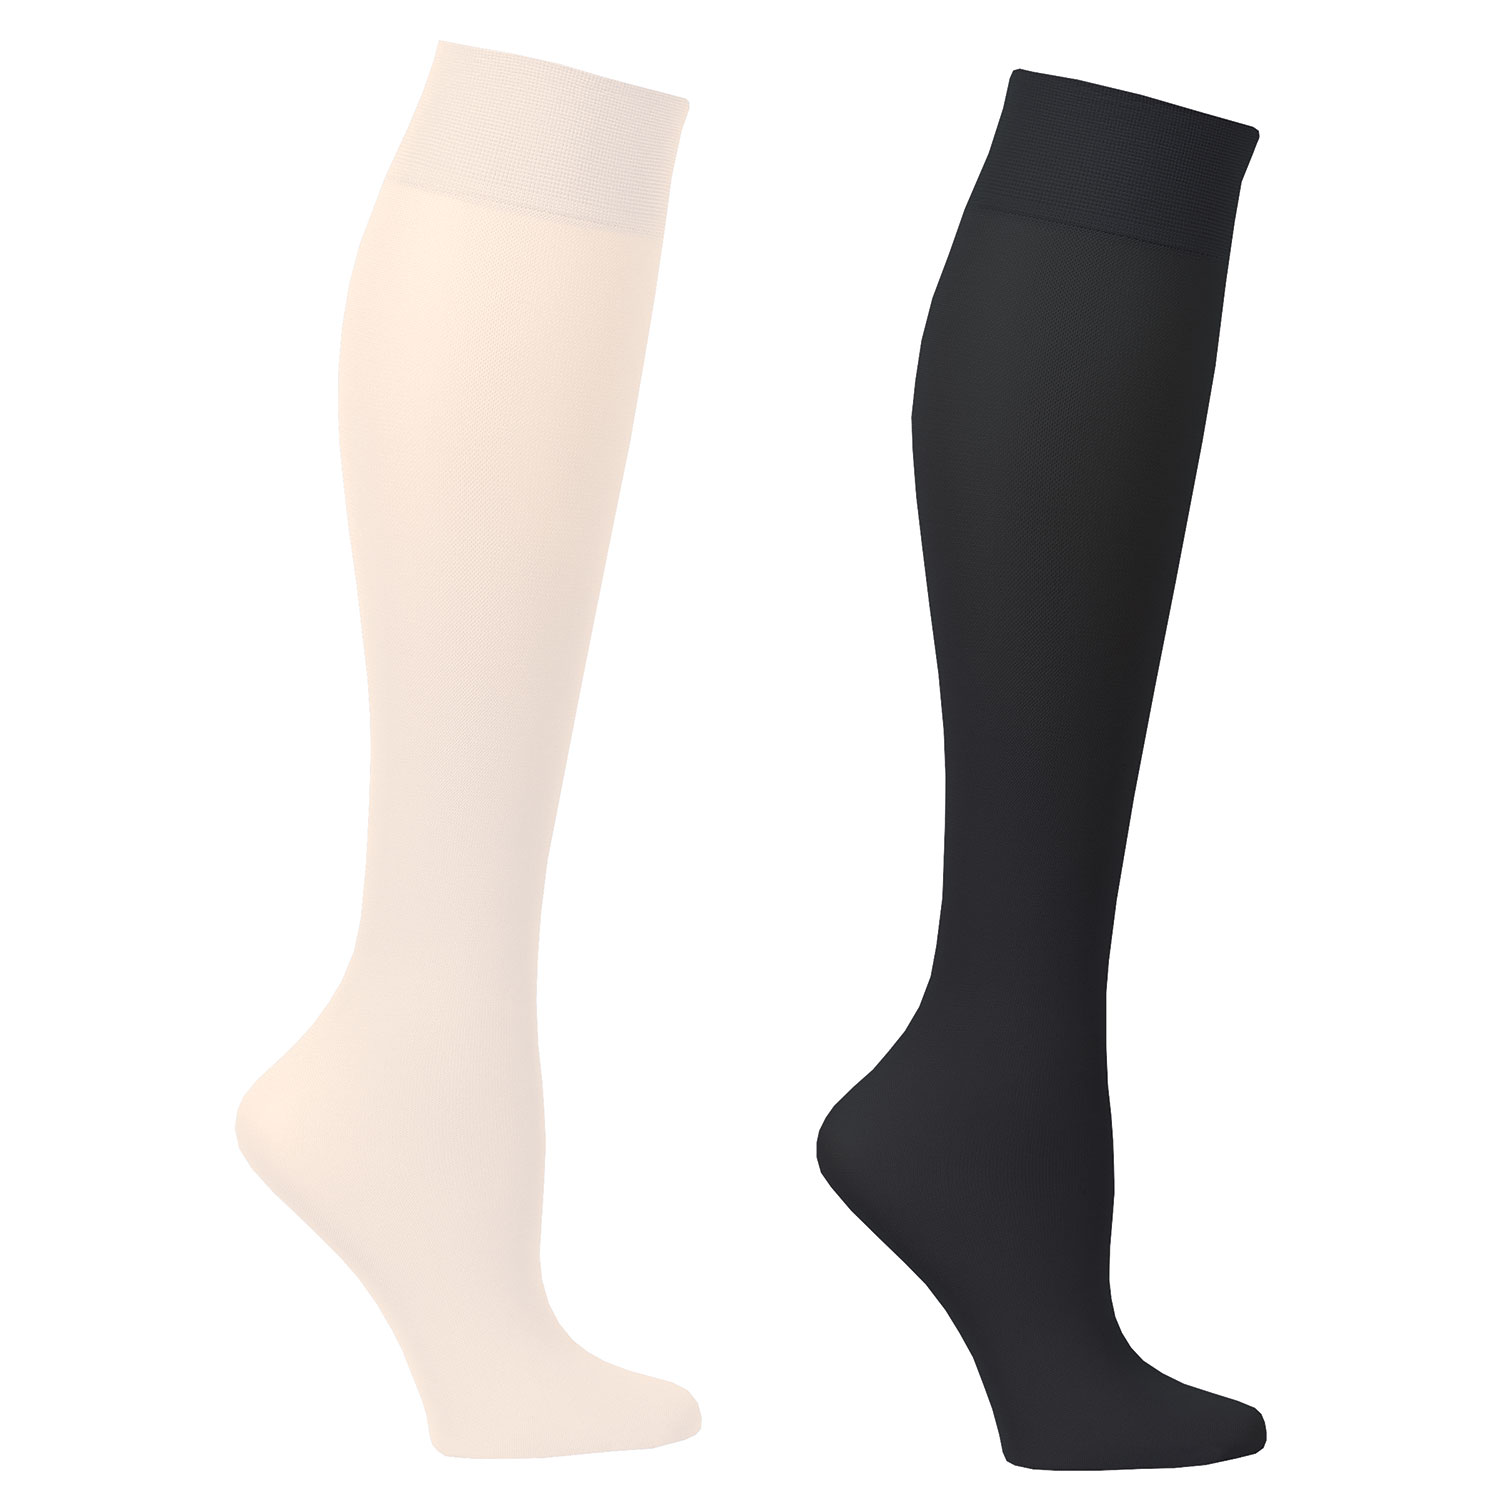 Celeste Stein Opaque Closed Toe Wide Calf Mild Compression Trouser Socks   2 Pack  ShopPBSorg